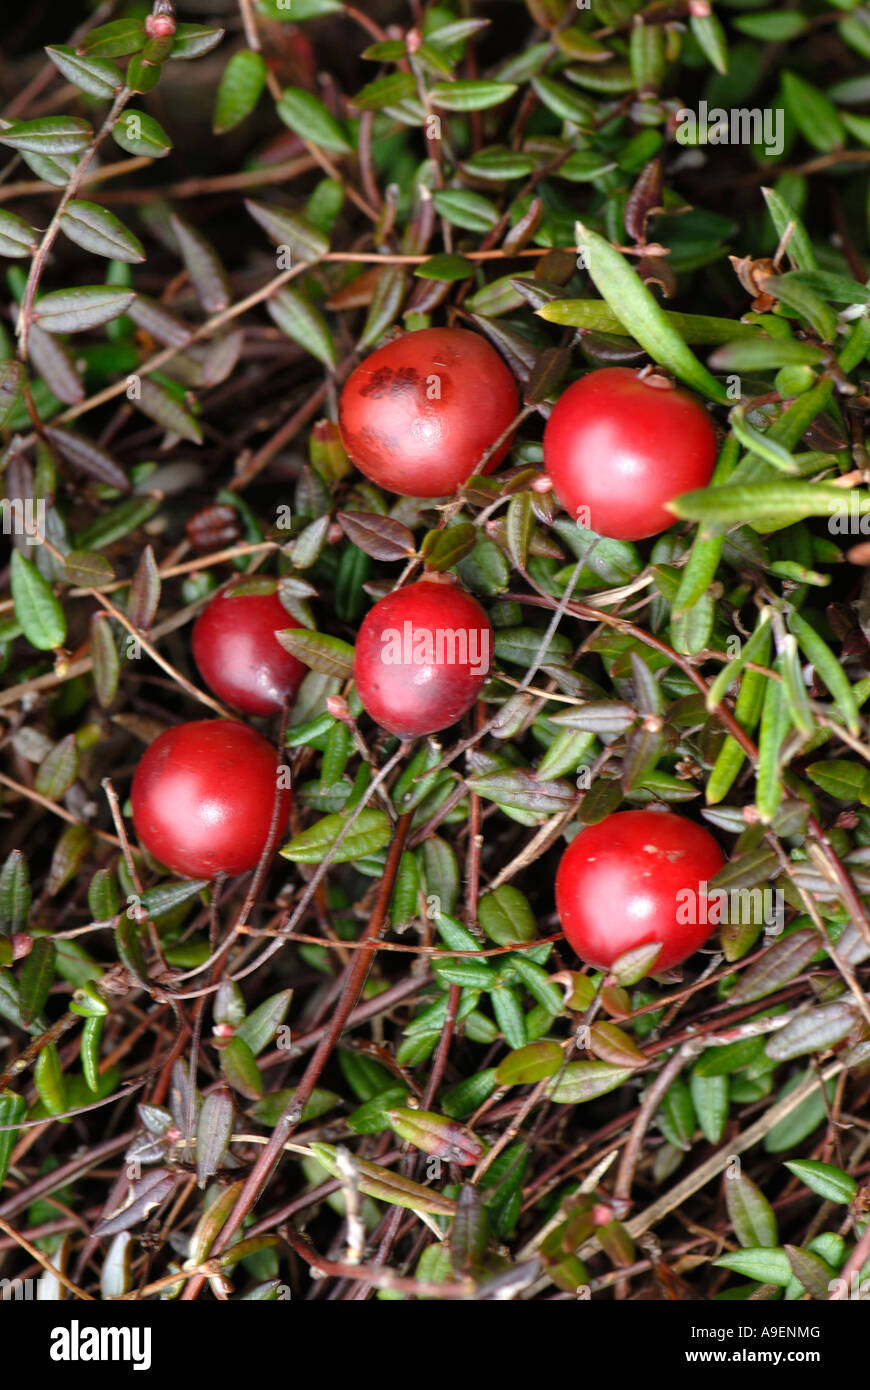 American Cranberry (Vaccinium macrocarpon, Oxycoccus macrocarpus), berries on the plant Stock Photo